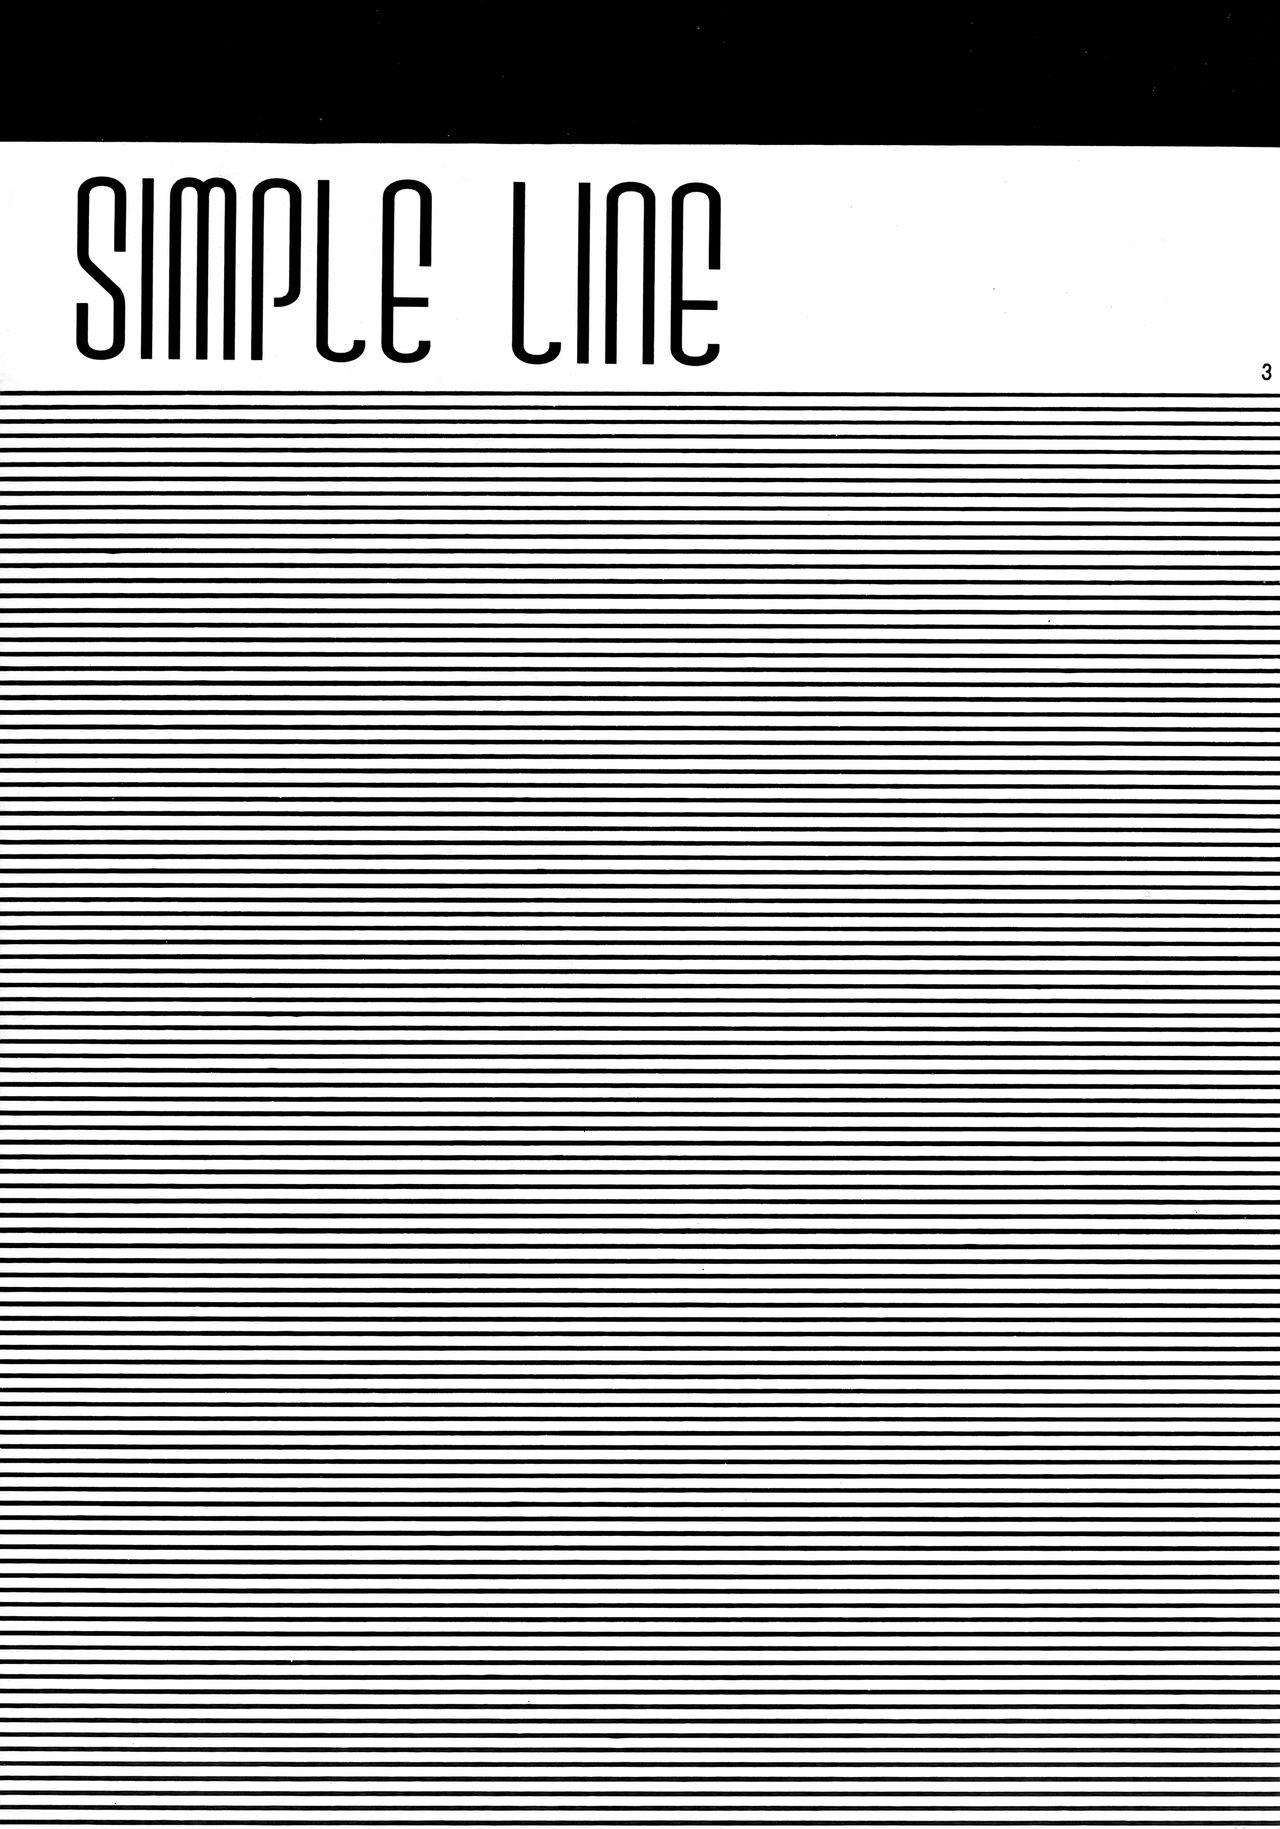 SIMPLE LINE 1